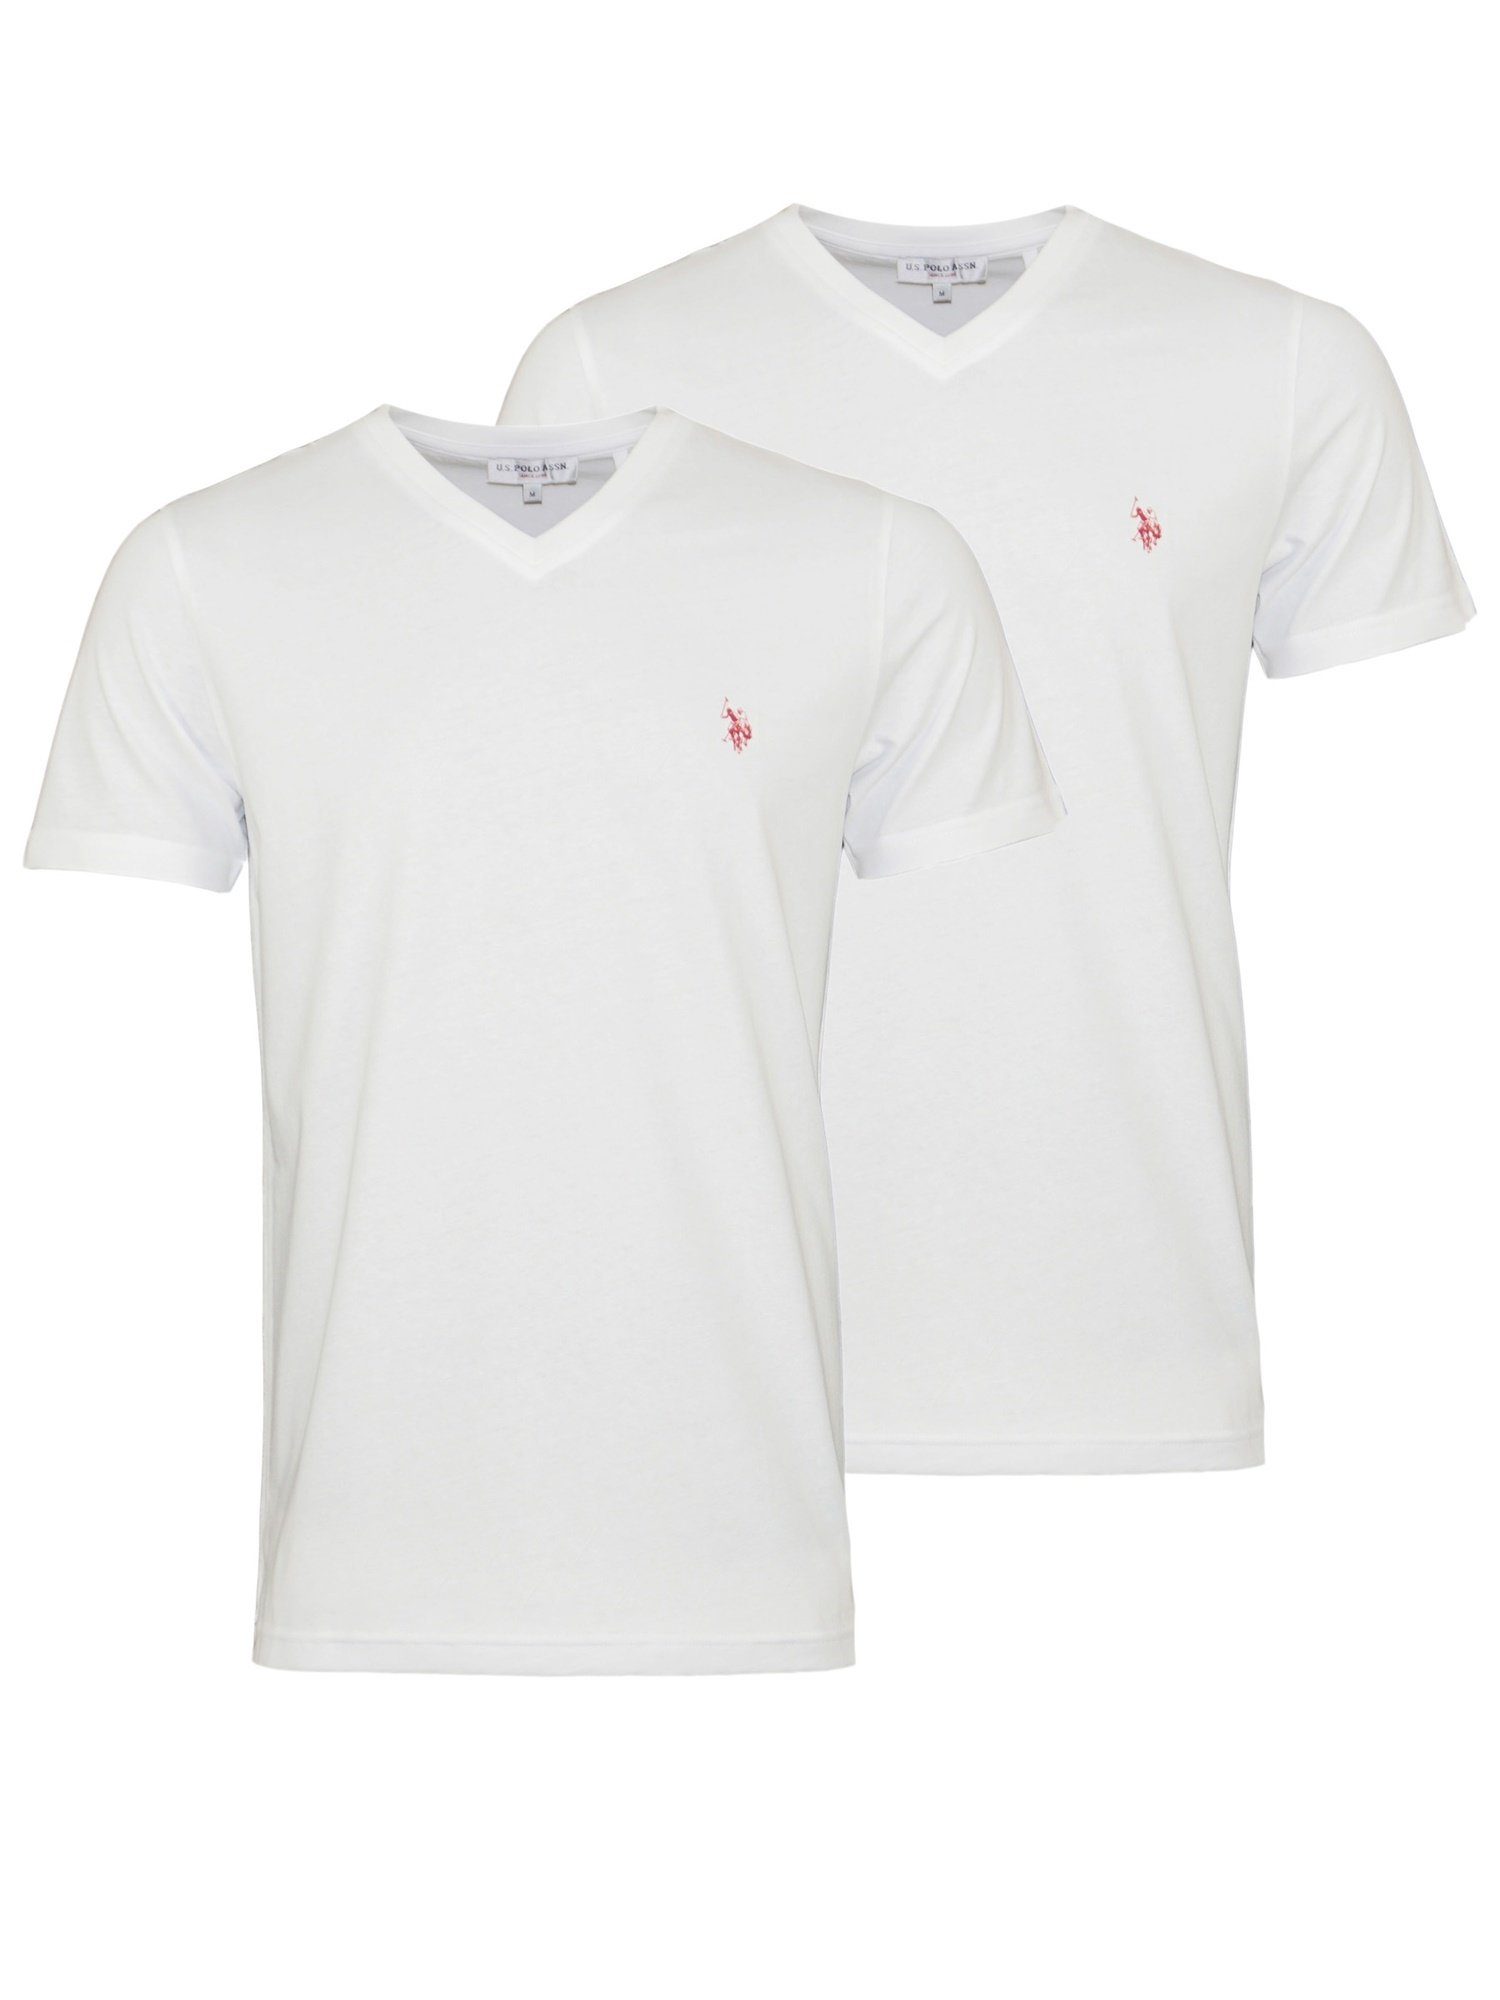 U.S. Polo Assn Shirts Pack T-Shirt T-Shirts 2er V-Neck